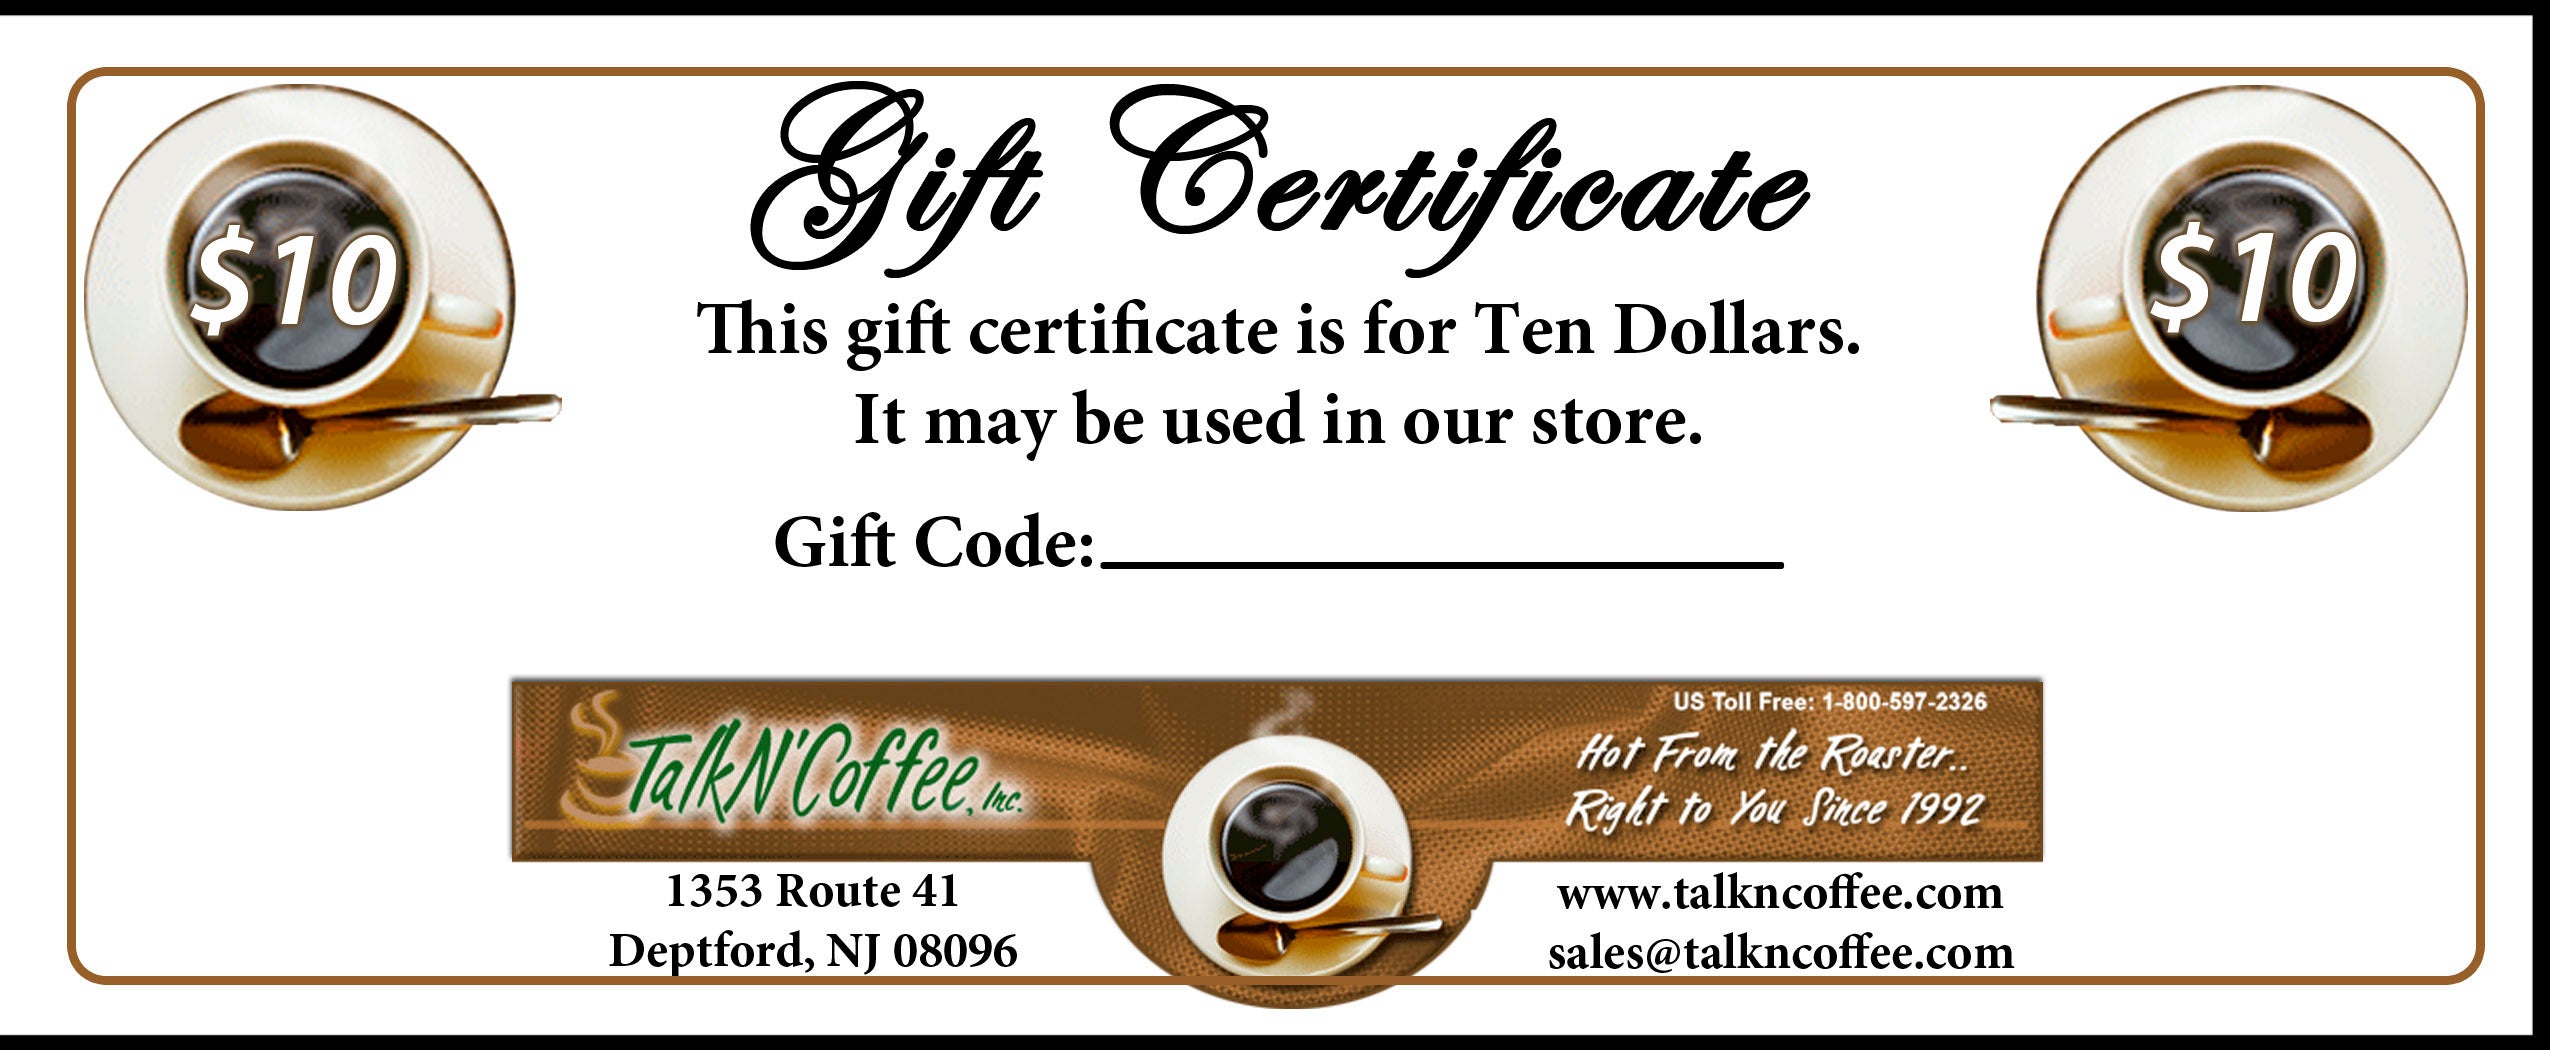 Talk N' Coffee - Coffee Gift Certificate Card Talk N' Coffee